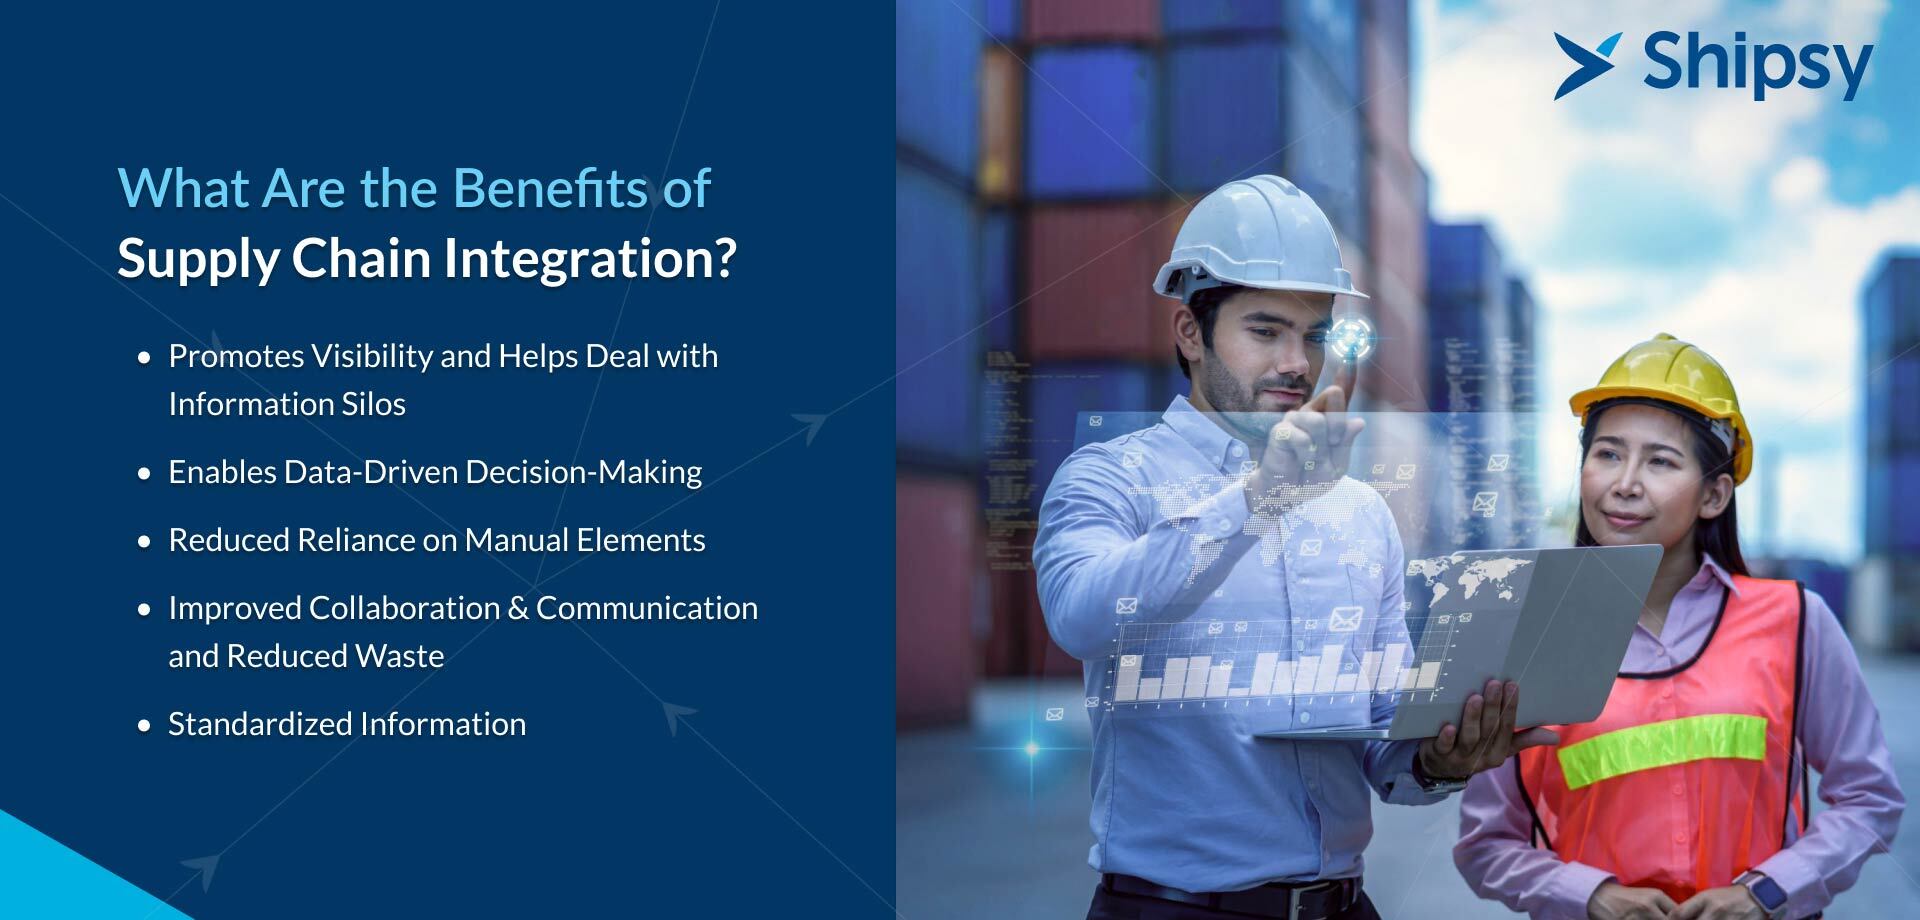 supply chain integration benefits